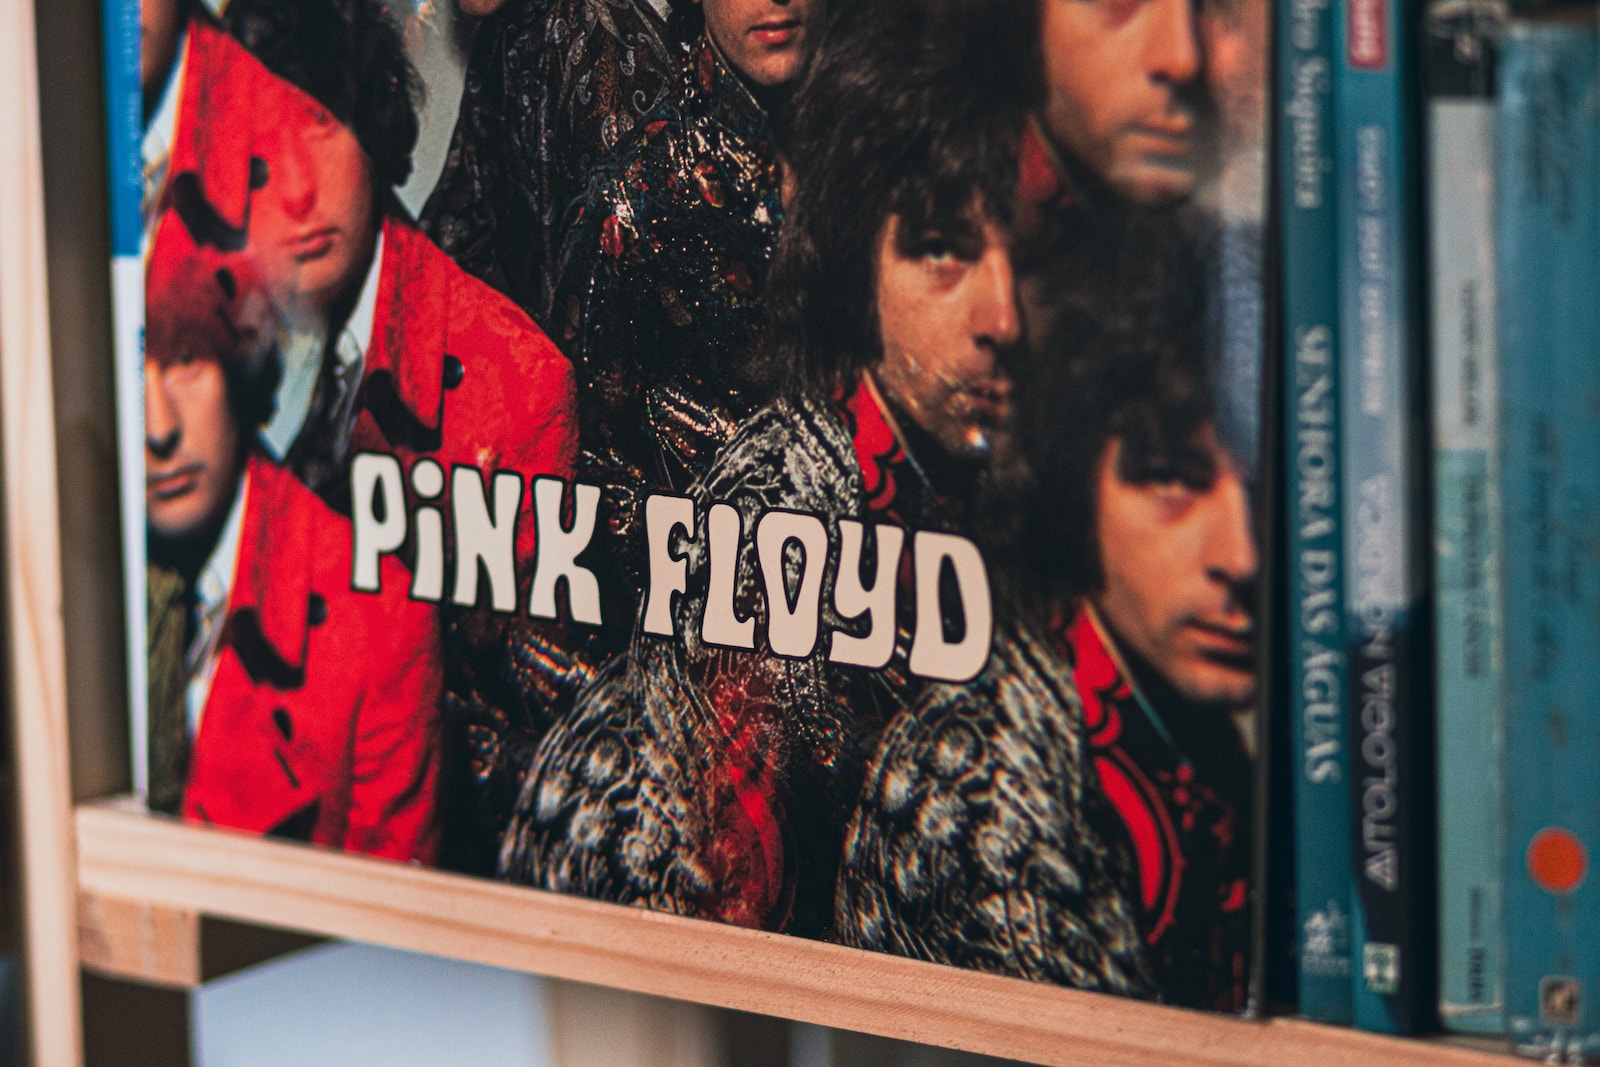 a book shelf with a pink floyd album on it